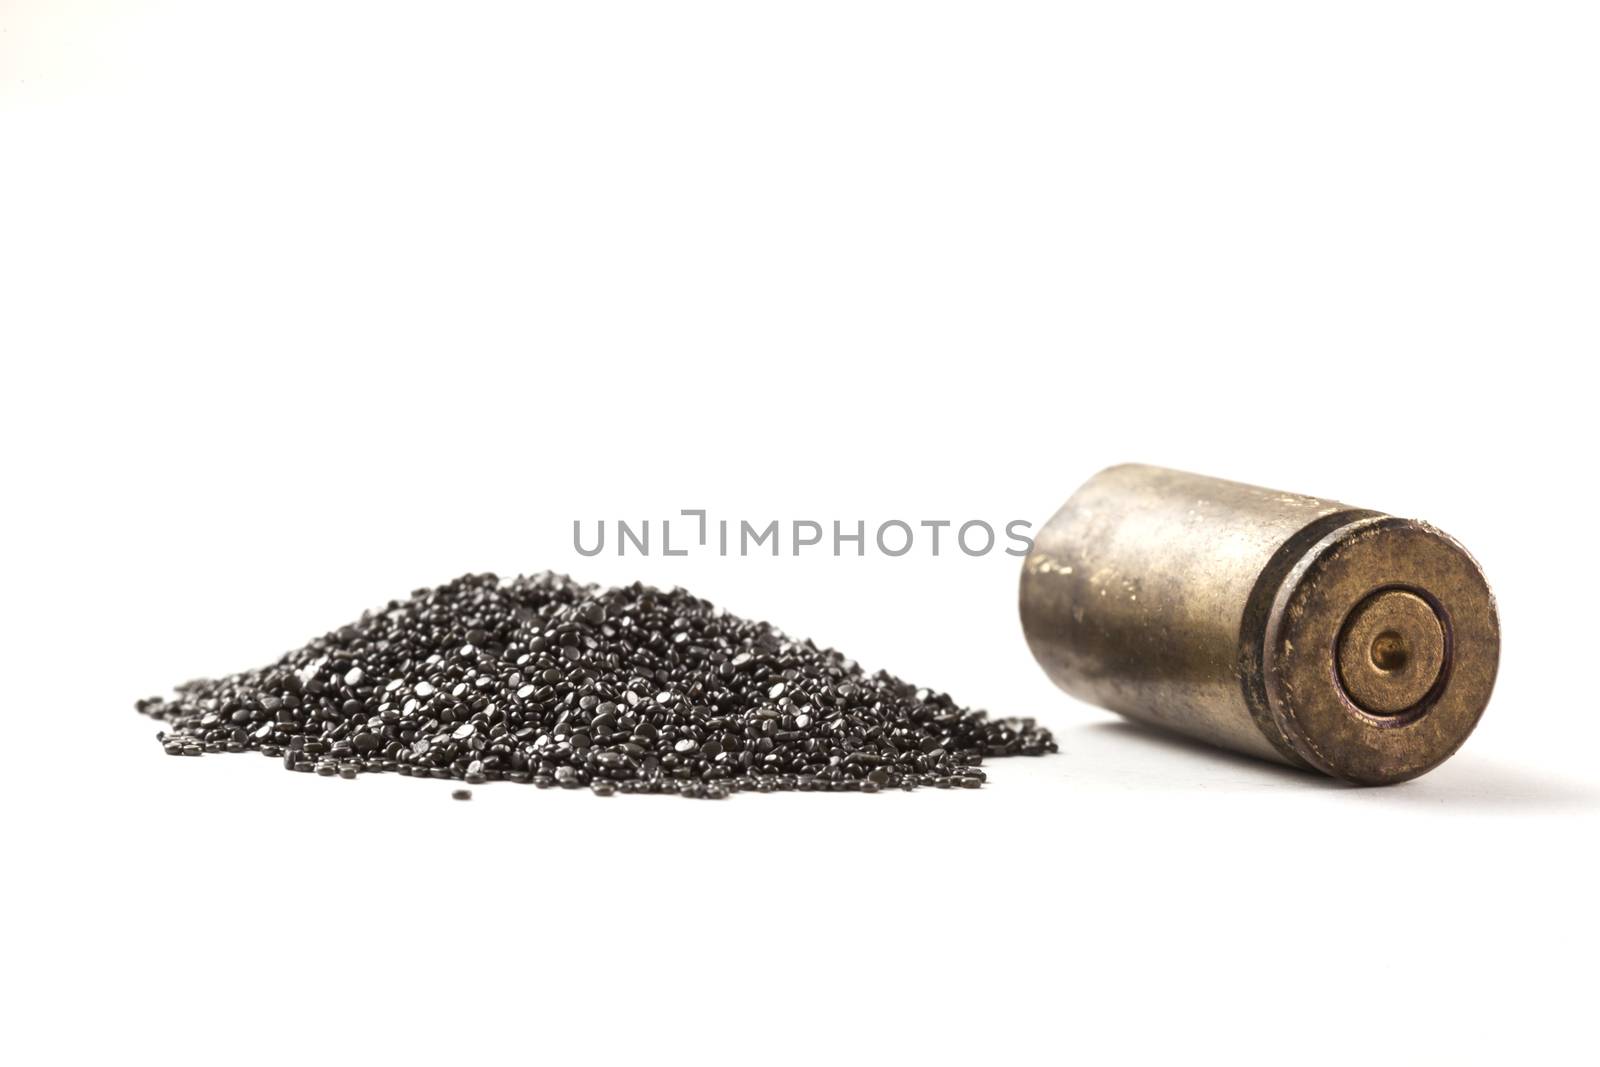 Rifle Bullet and Shel near pile of gunpowder isolated on white